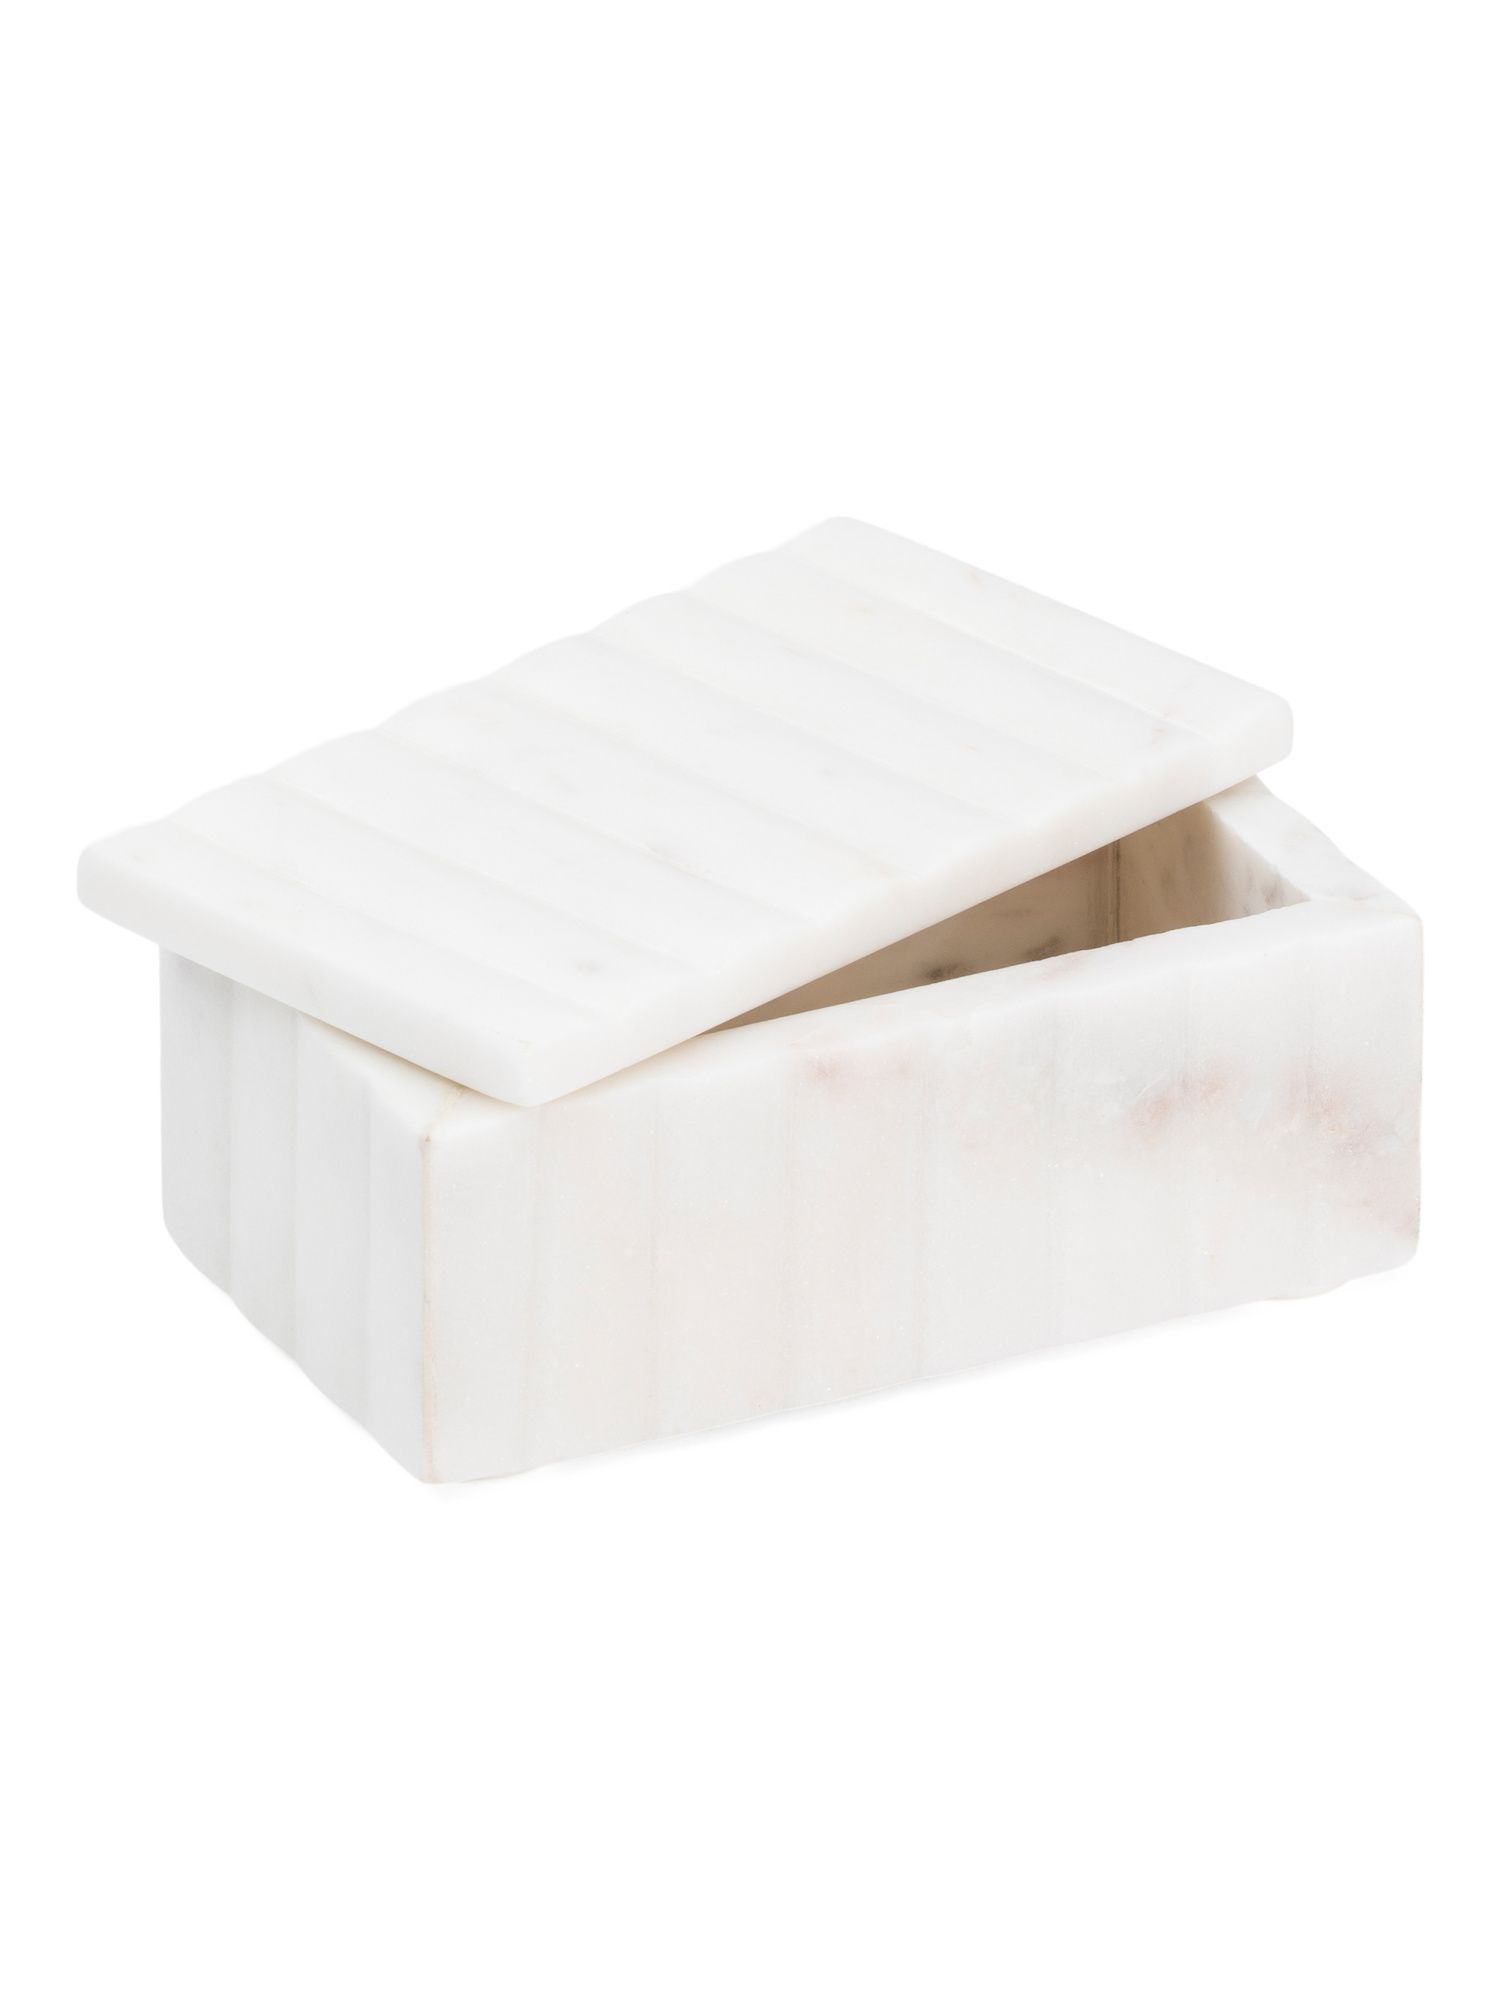 7x3 Ridged Marble Decorative Box | Marshalls